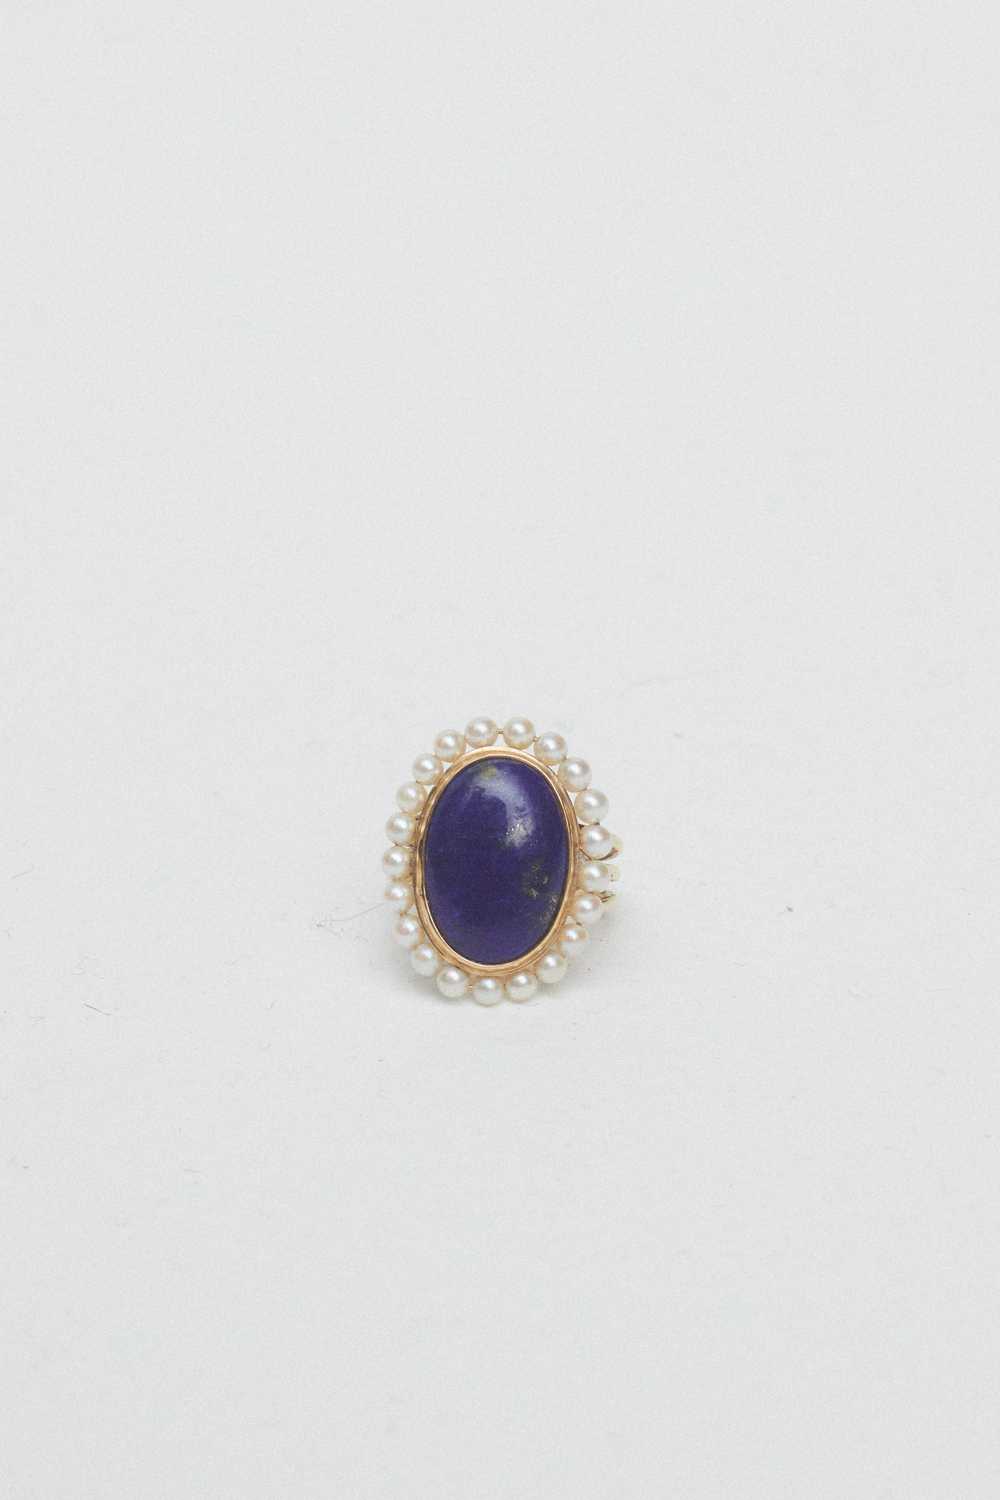 Lapis Lazuli and Pearl Ring - image 2